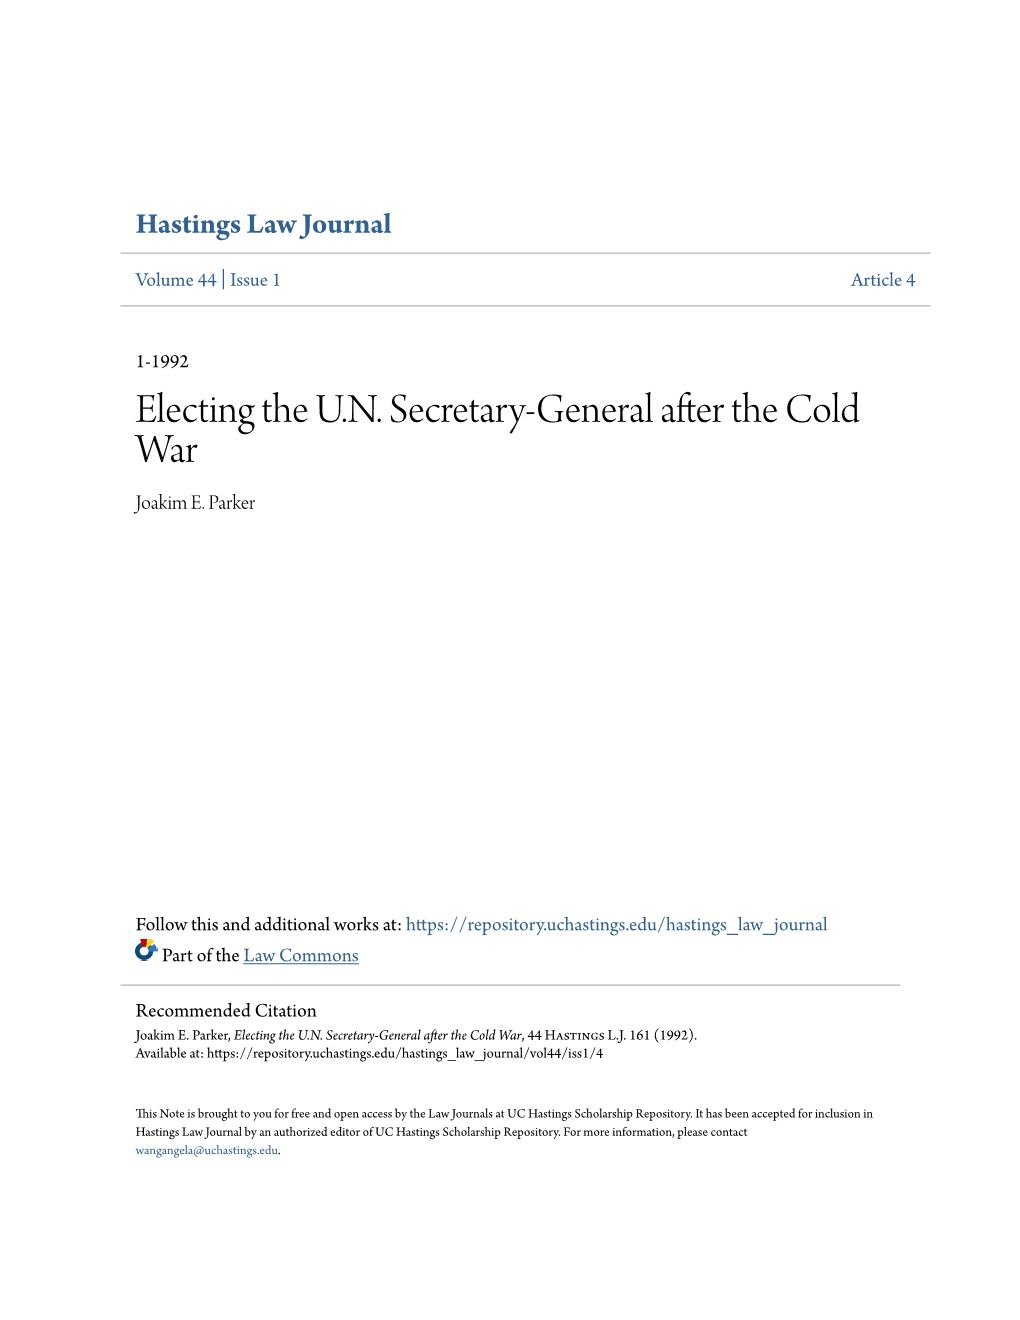 Electing the U.N. Secretary-General After the Cold War Joakim E